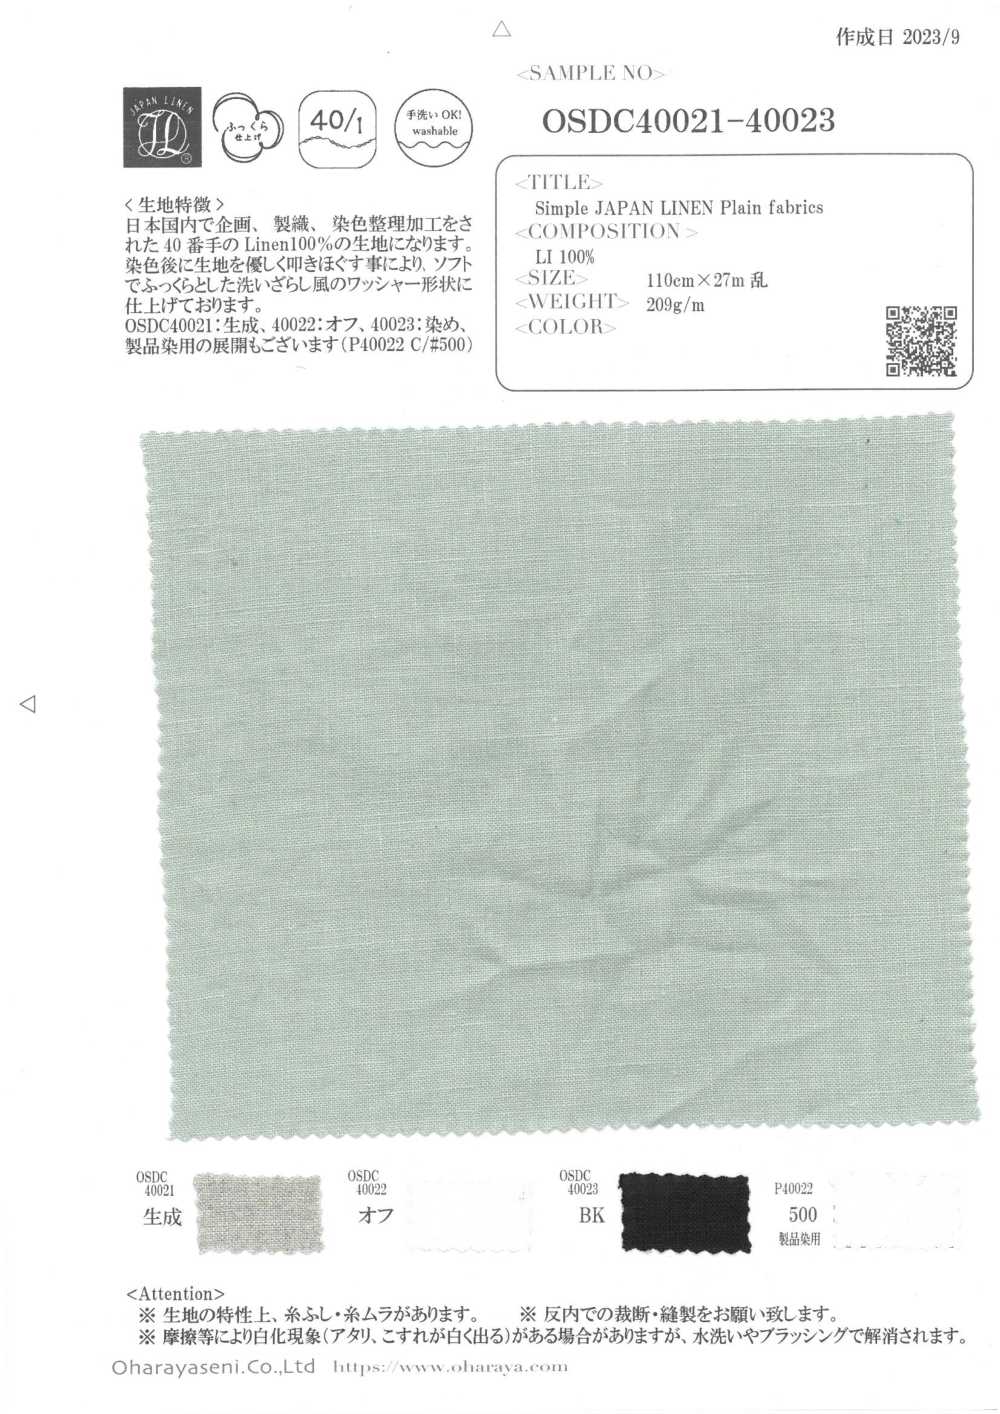 OSDC40023 Simple JAPAN LINEN Plain fabrics (カラー)[生地] 小原屋繊維